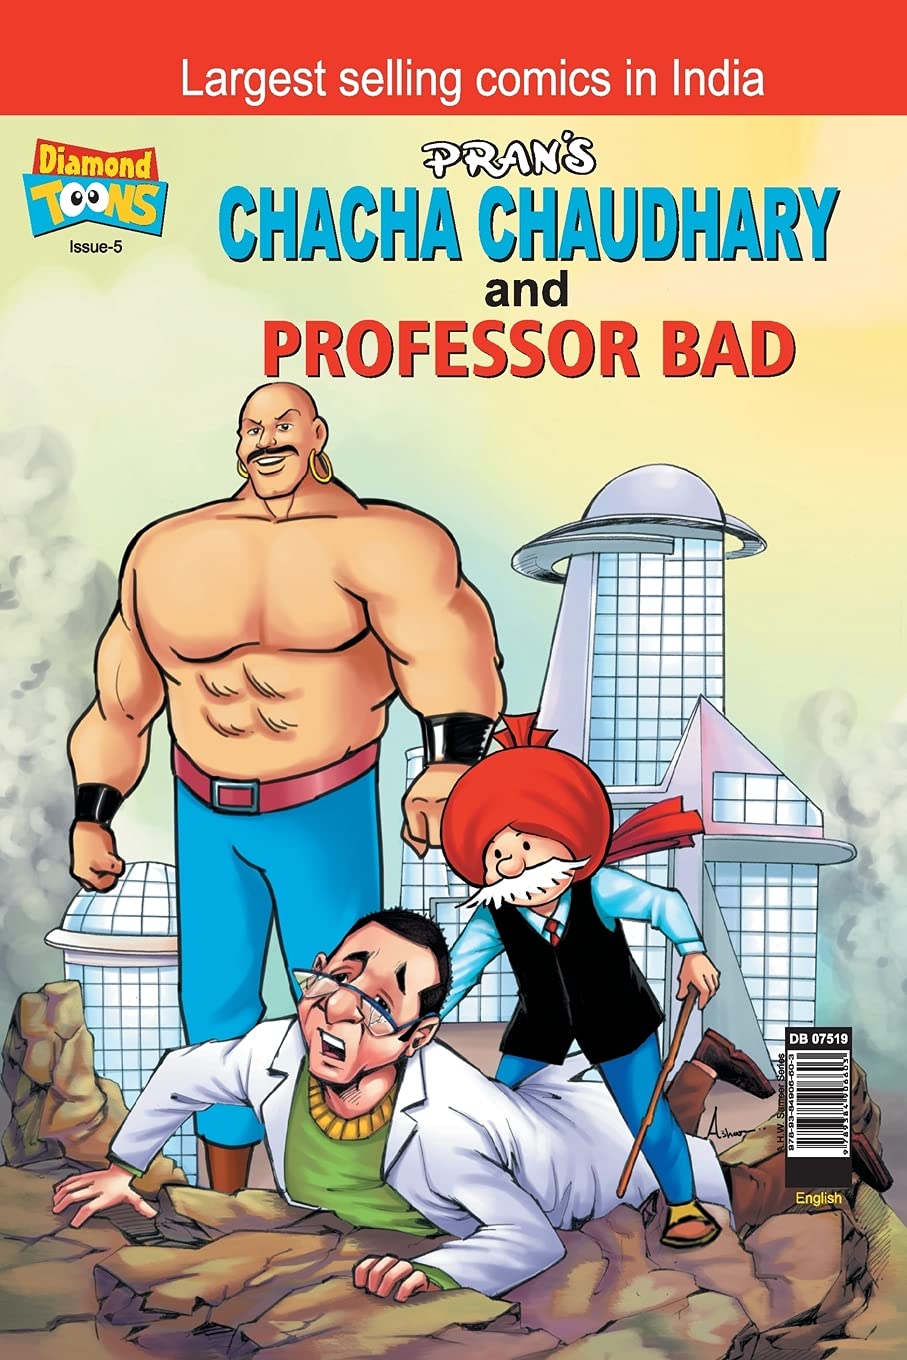 Chacha Chaudhary and Professor Bad (পেপারব্যাক)